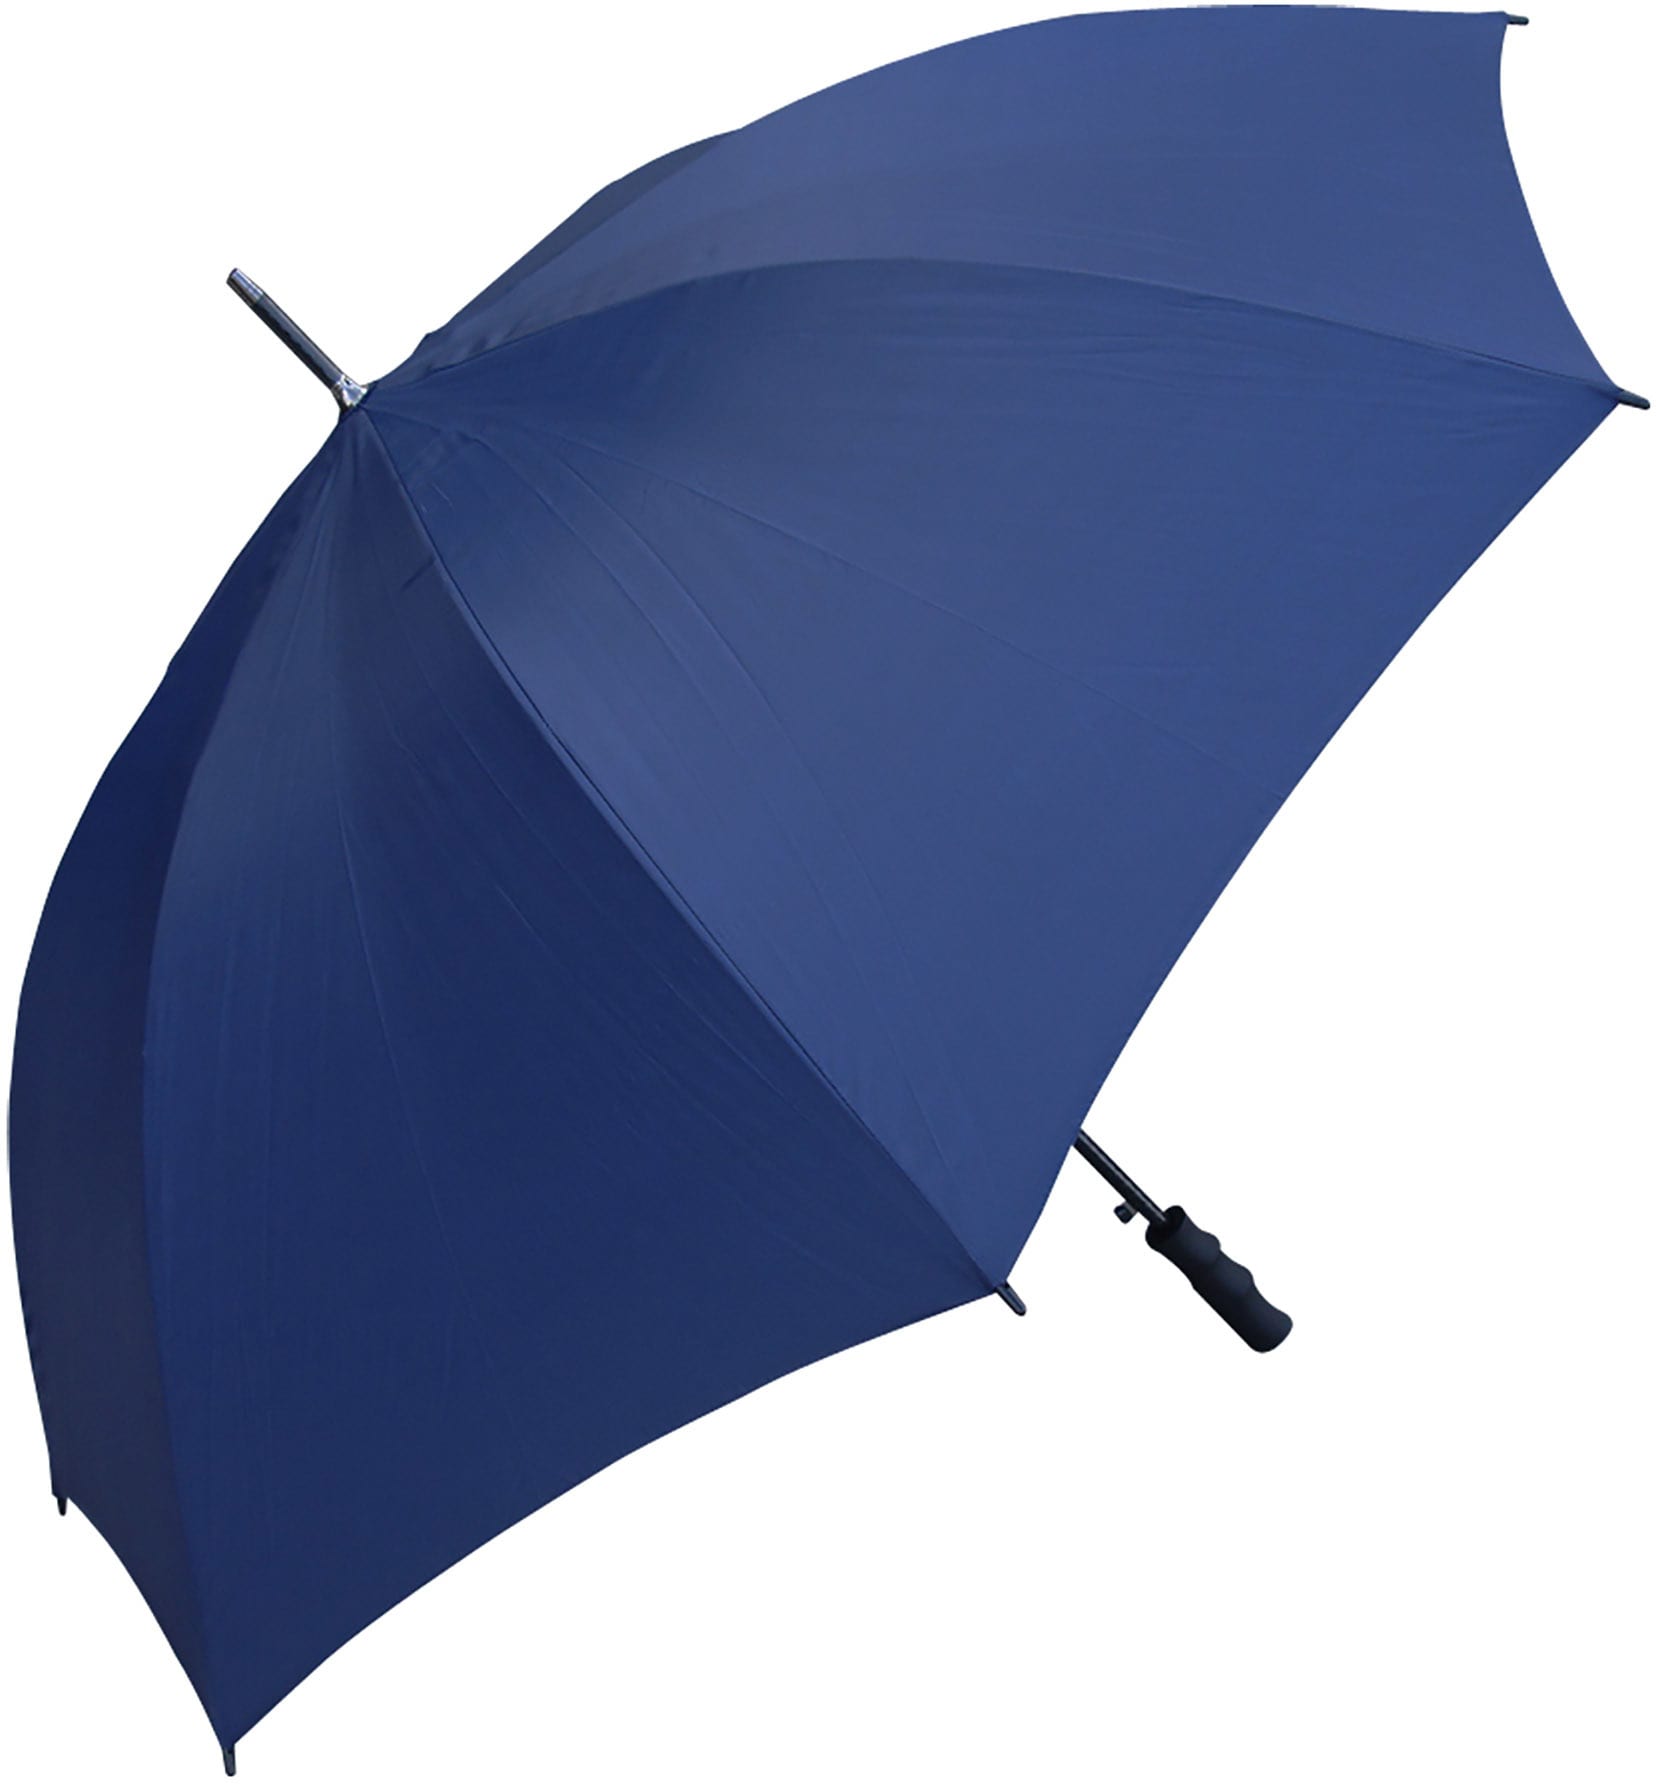 The Sands Golf Umbrella